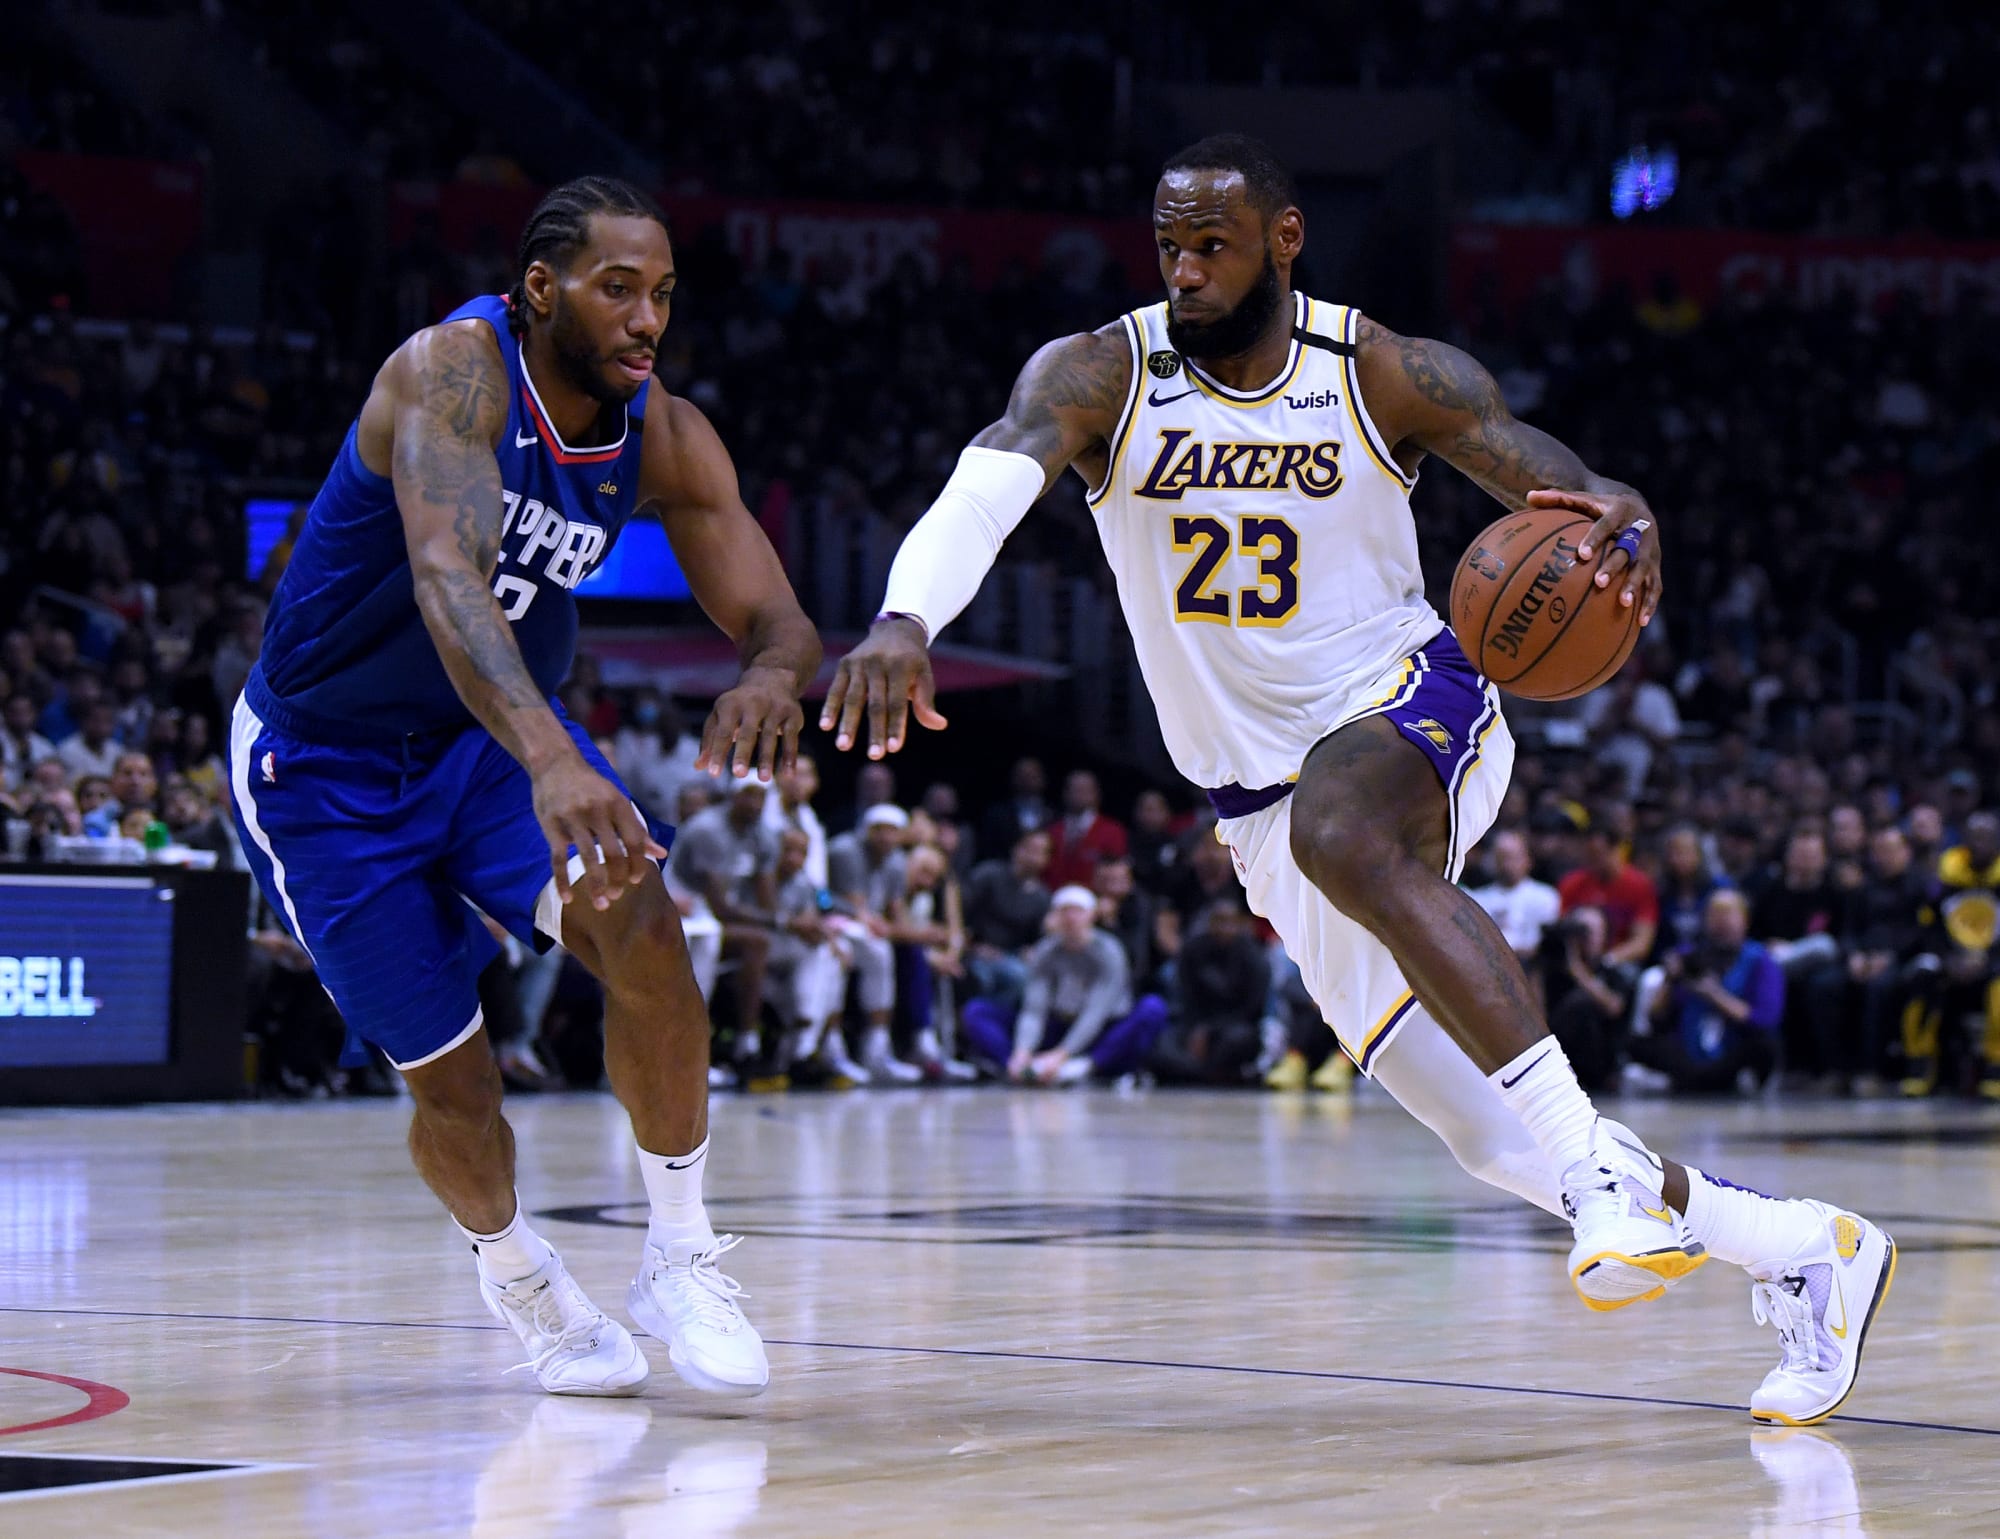 Lakers' LeBron James put on a defensive clinic vs. Kawhi Leonard